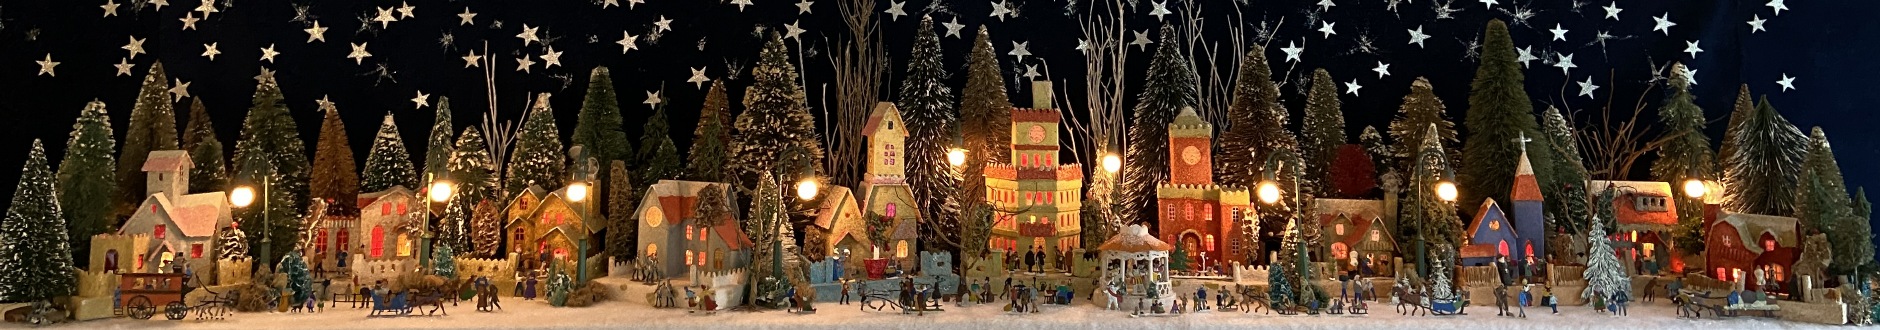 Antique Christmas cardboard house putz (village) on fireplace mantel at night (280K)